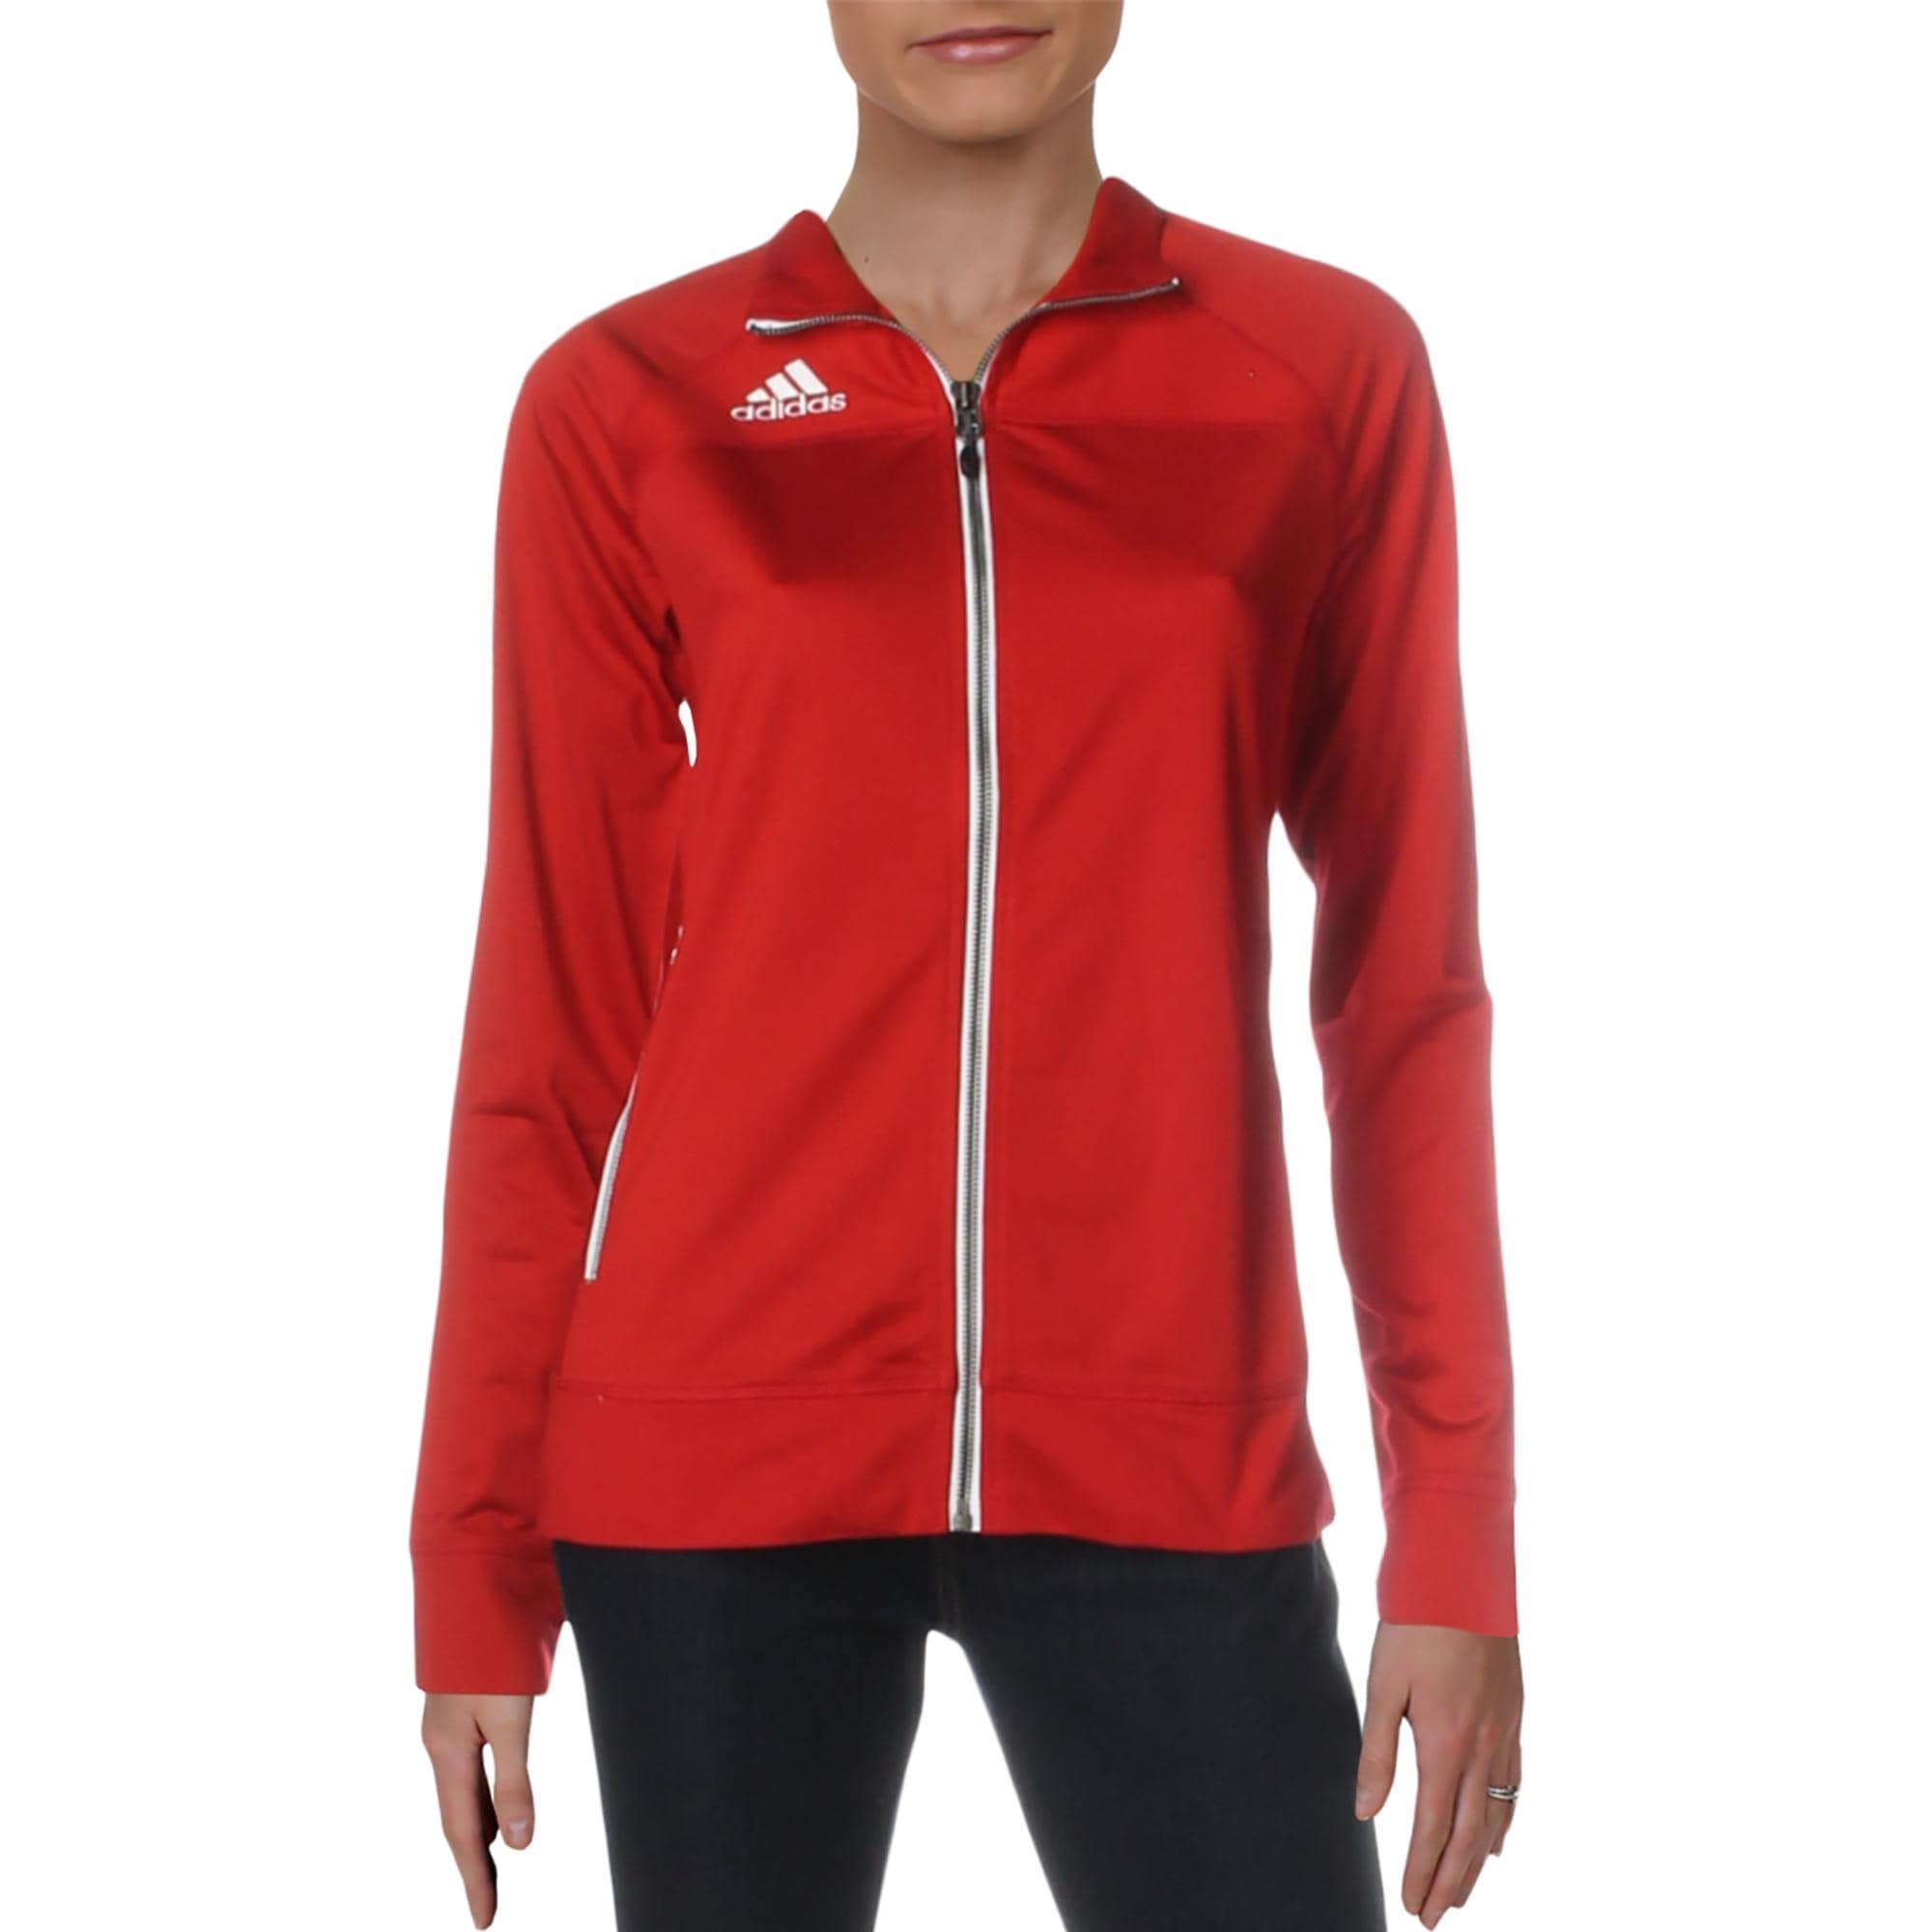 adidas women's climalite track jacket